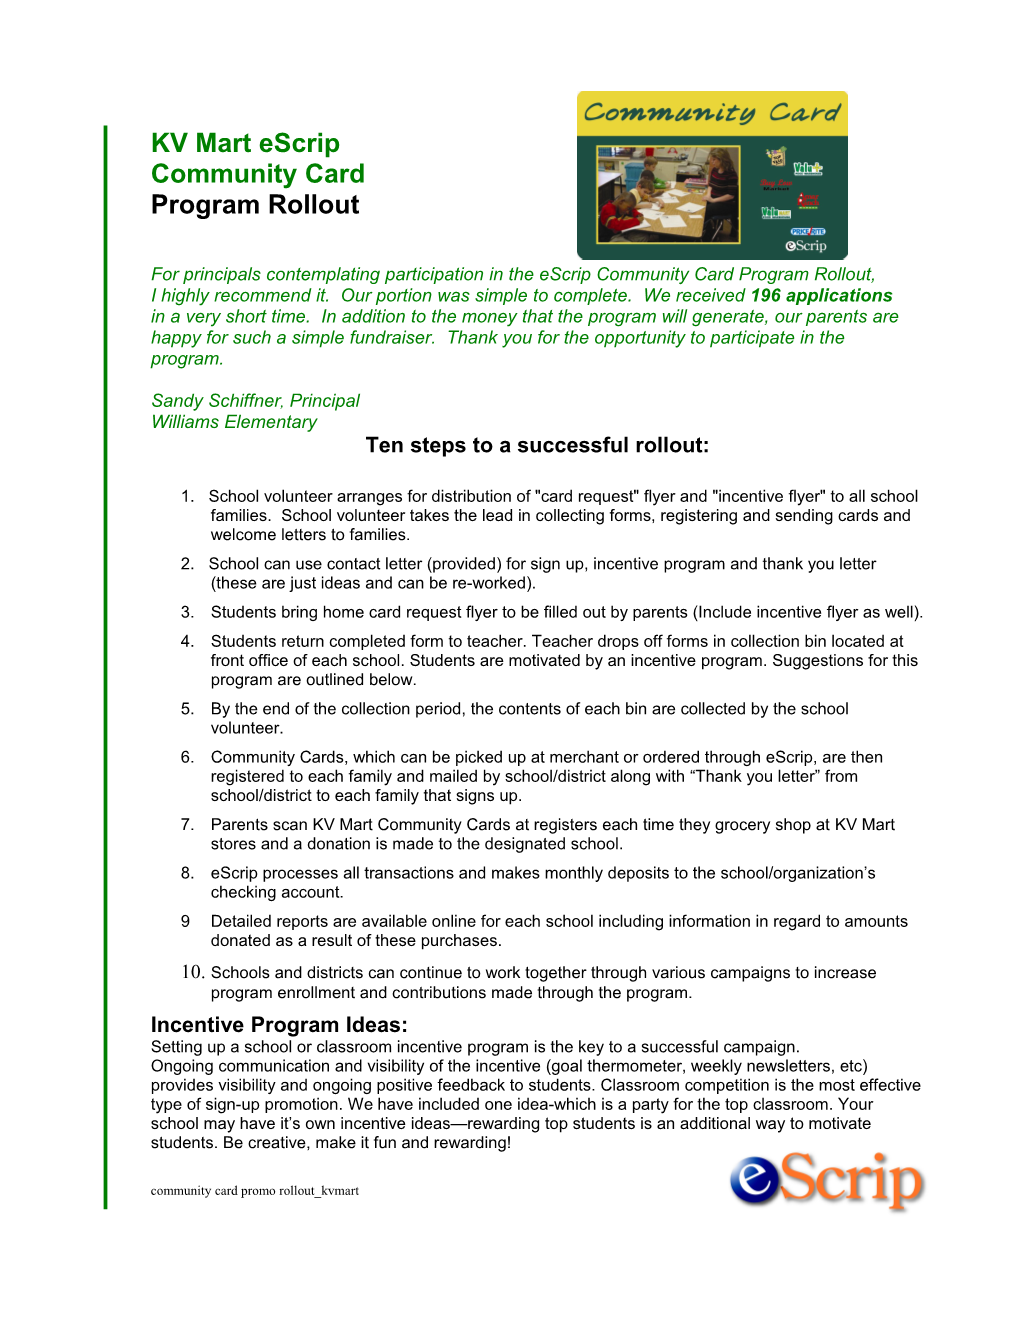 For Principals Contemplating Participation in the Escrip Community Card Program Rollout